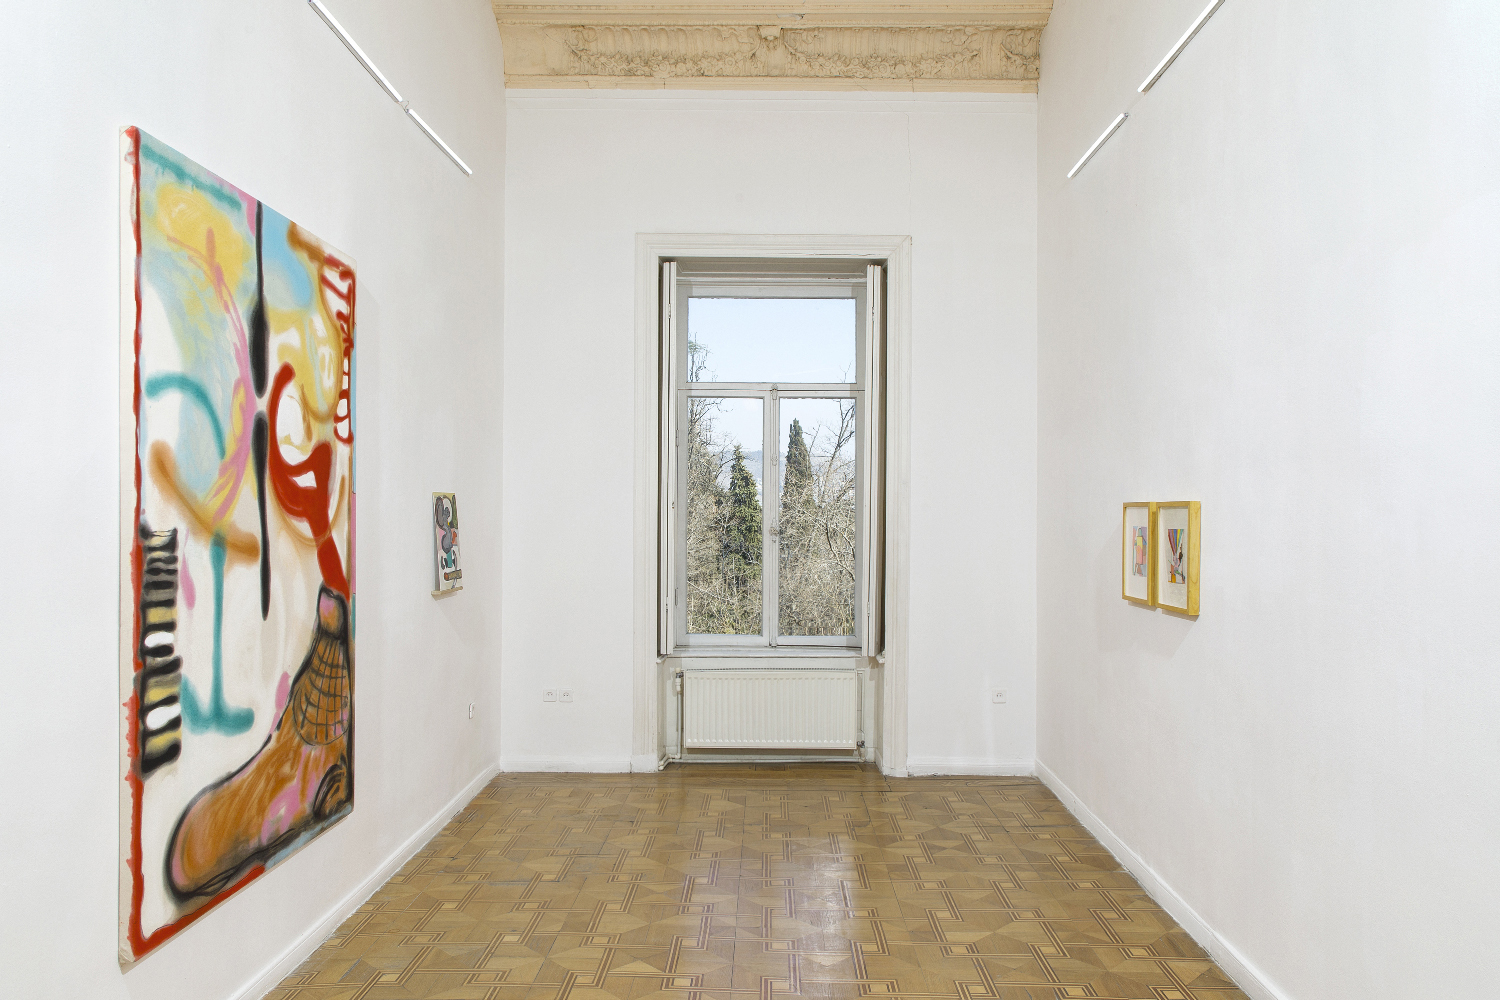 Installation view, Tamo Jugeli's solo exhibition 'Random Order' at Gallery Artbeat, Tbilisi, Georgia